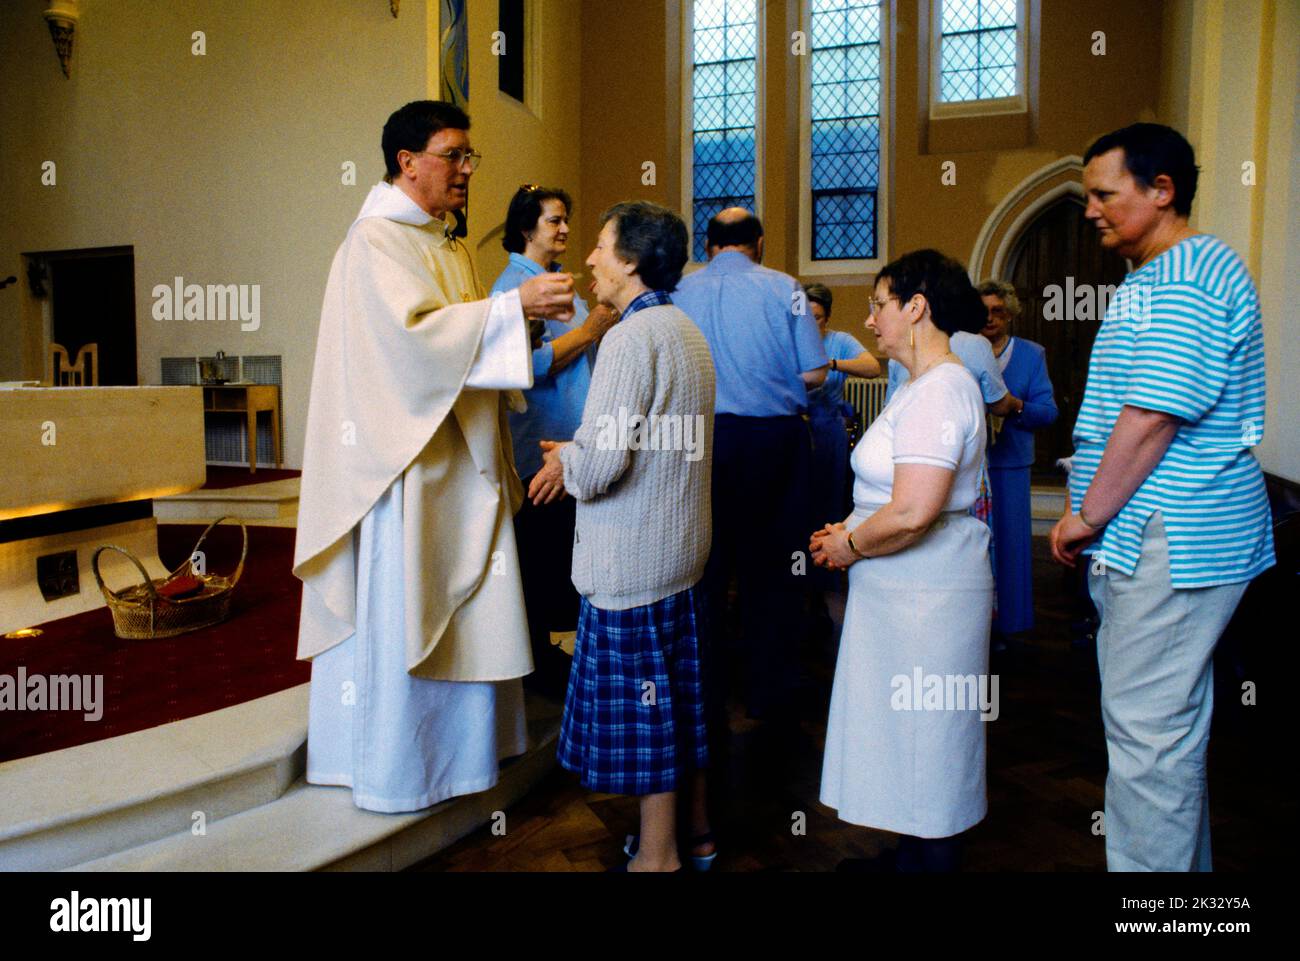 Woman Receiving Eucharist Wafer at Communion St Joseph's Church Roehampton London England Stock Photo